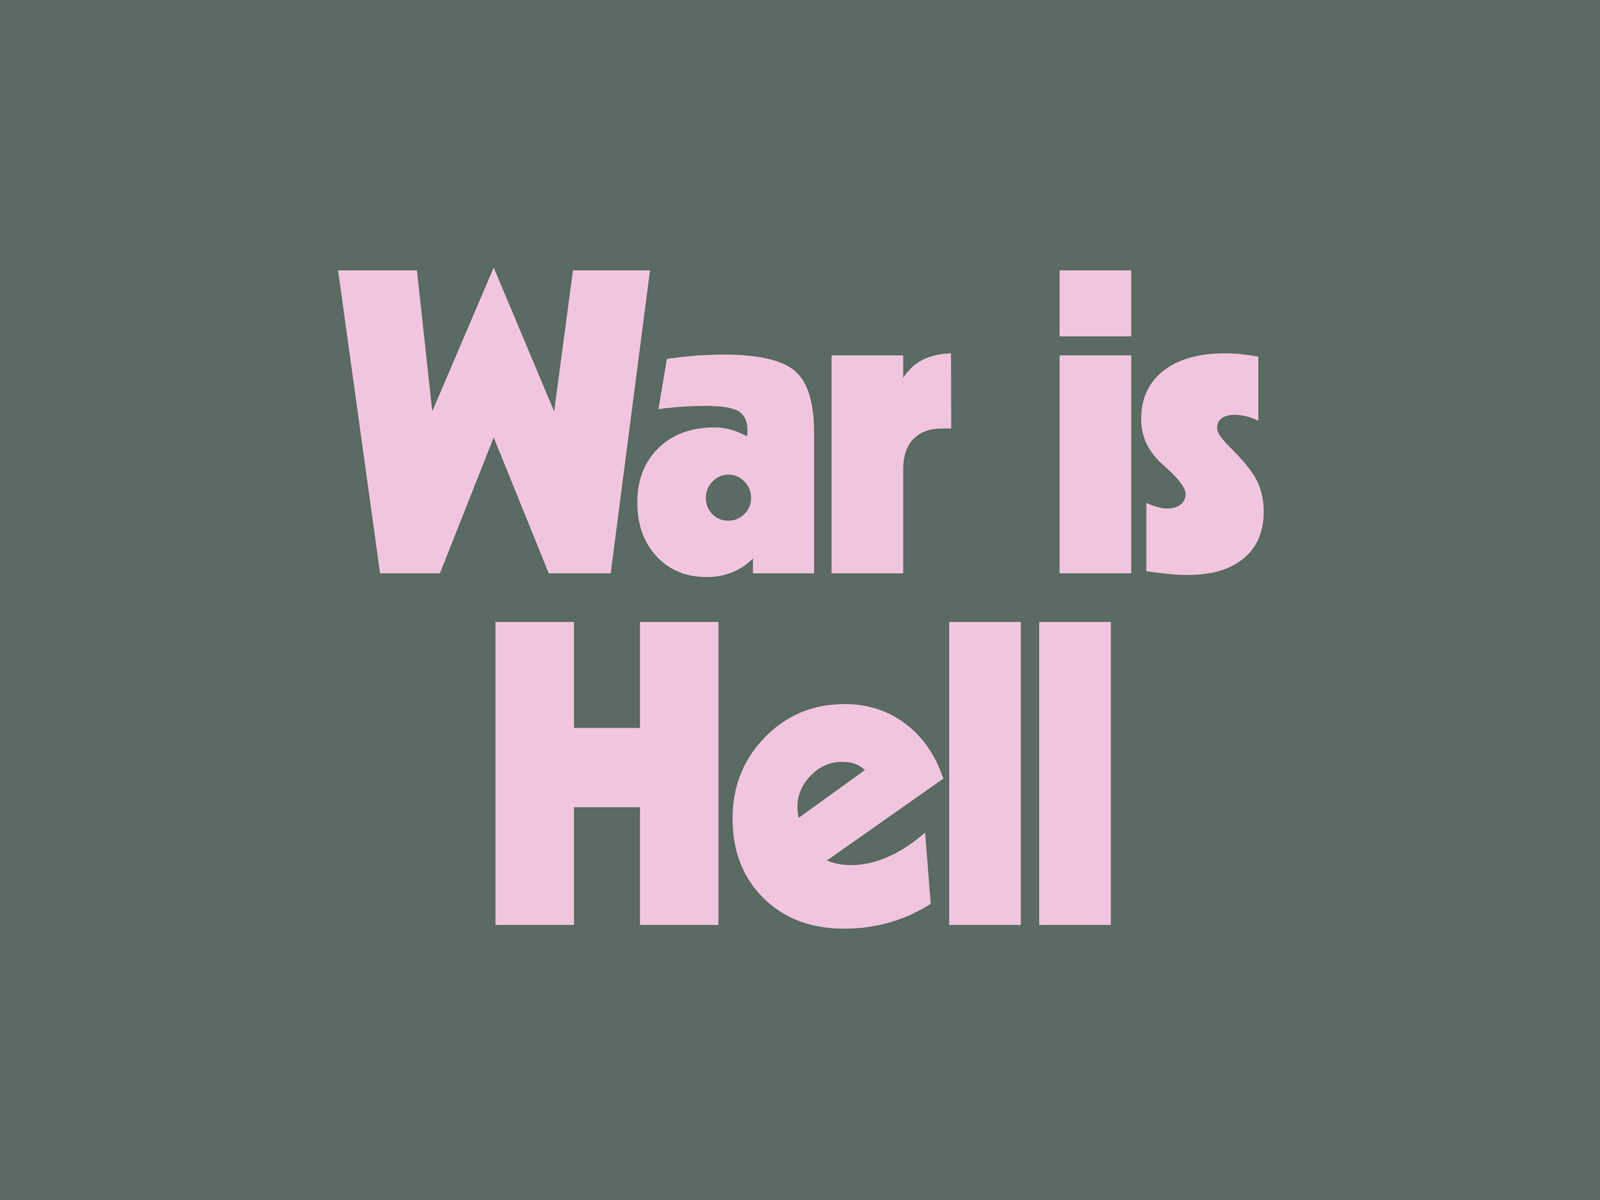 War is Hell